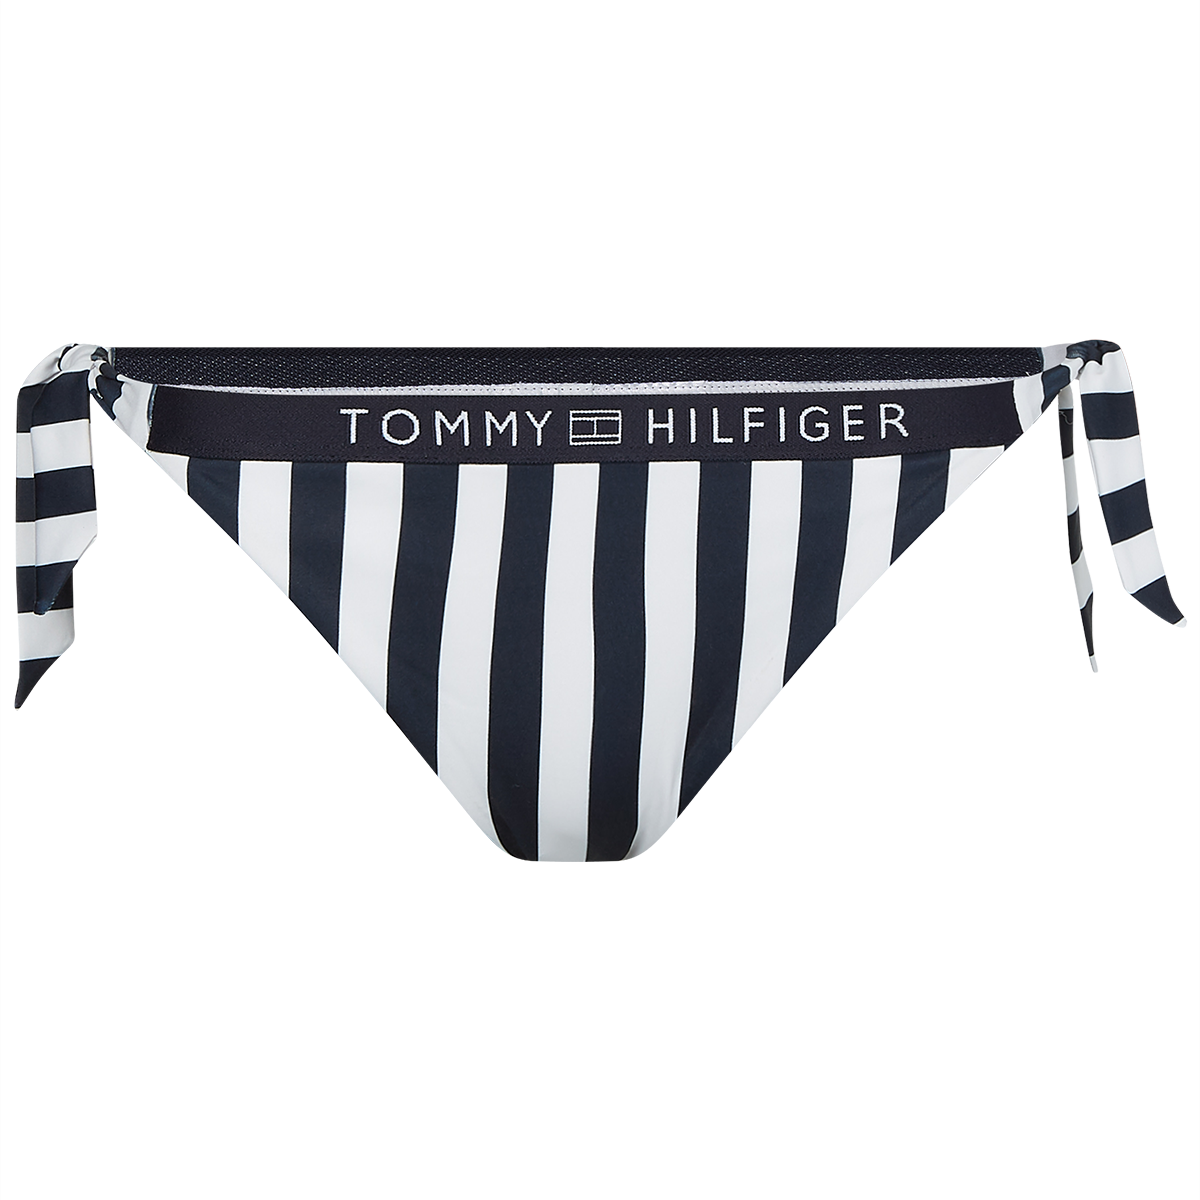 Tommy Hilfiger Lingeri Bikini Tai trusse, Farve: Sort/Hvid, Størrelse: L, Dame